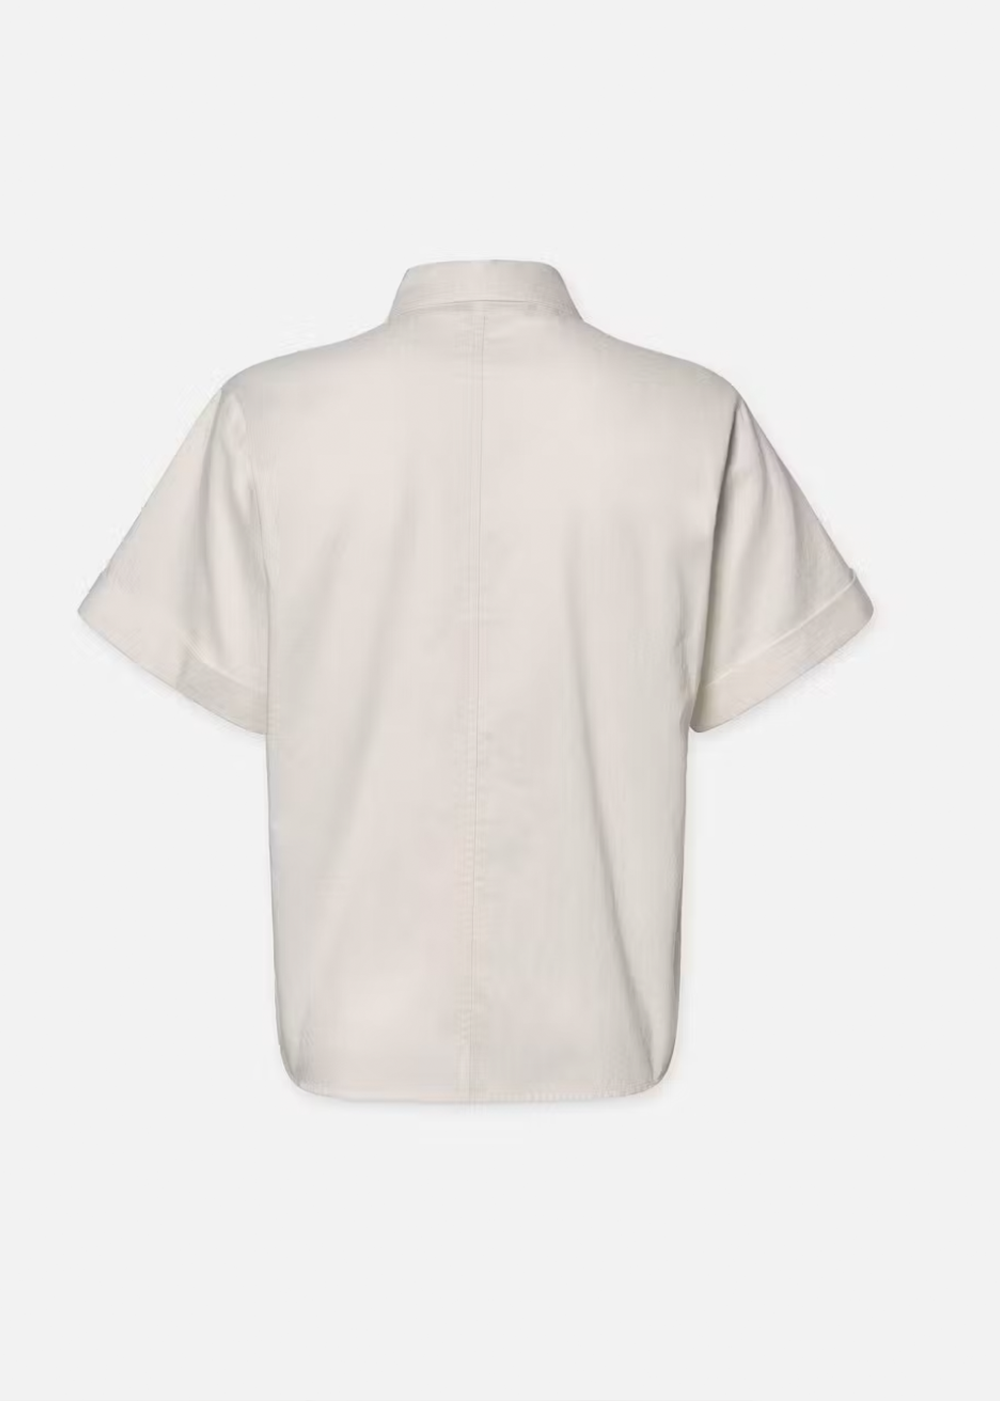 Patch Pocket Utility Shirt - Cream - Frame - Danali